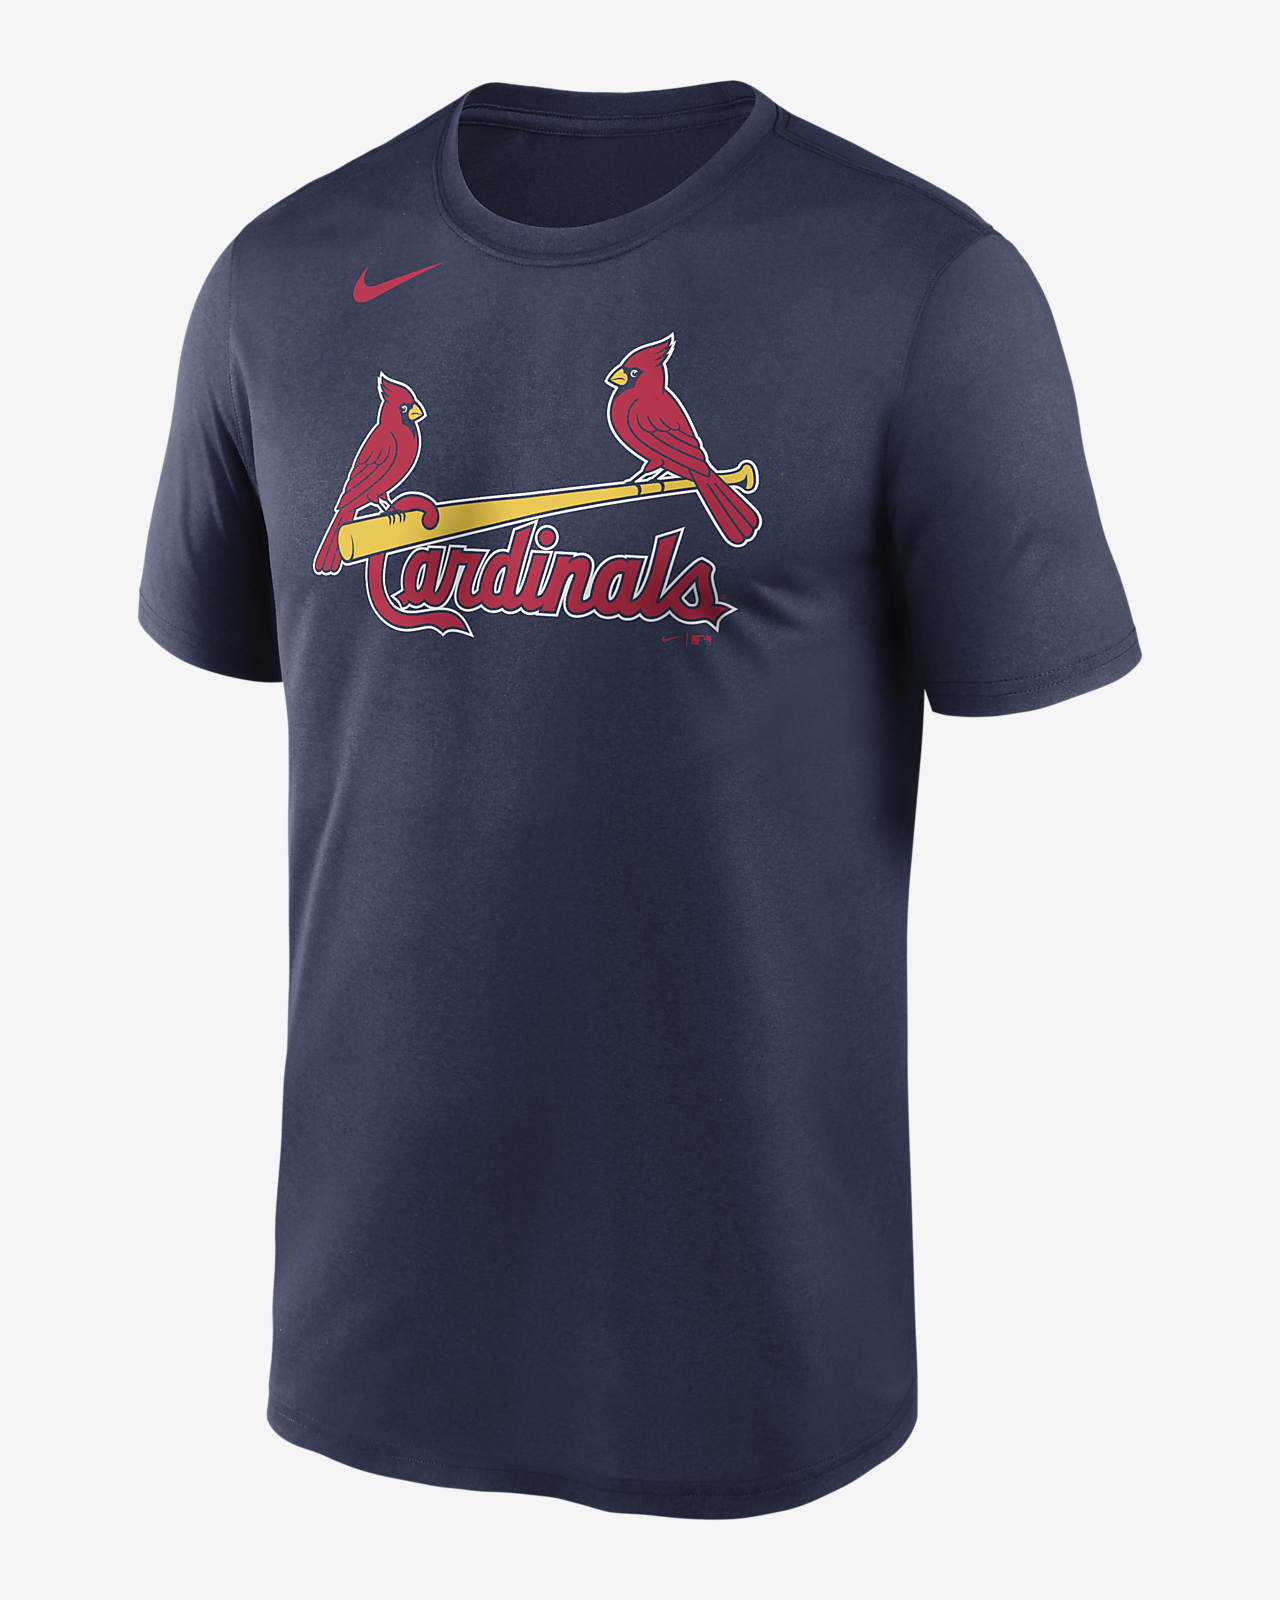 St. Louis Cardinals Shirt for Men St. Louis Cardinals Shirt 